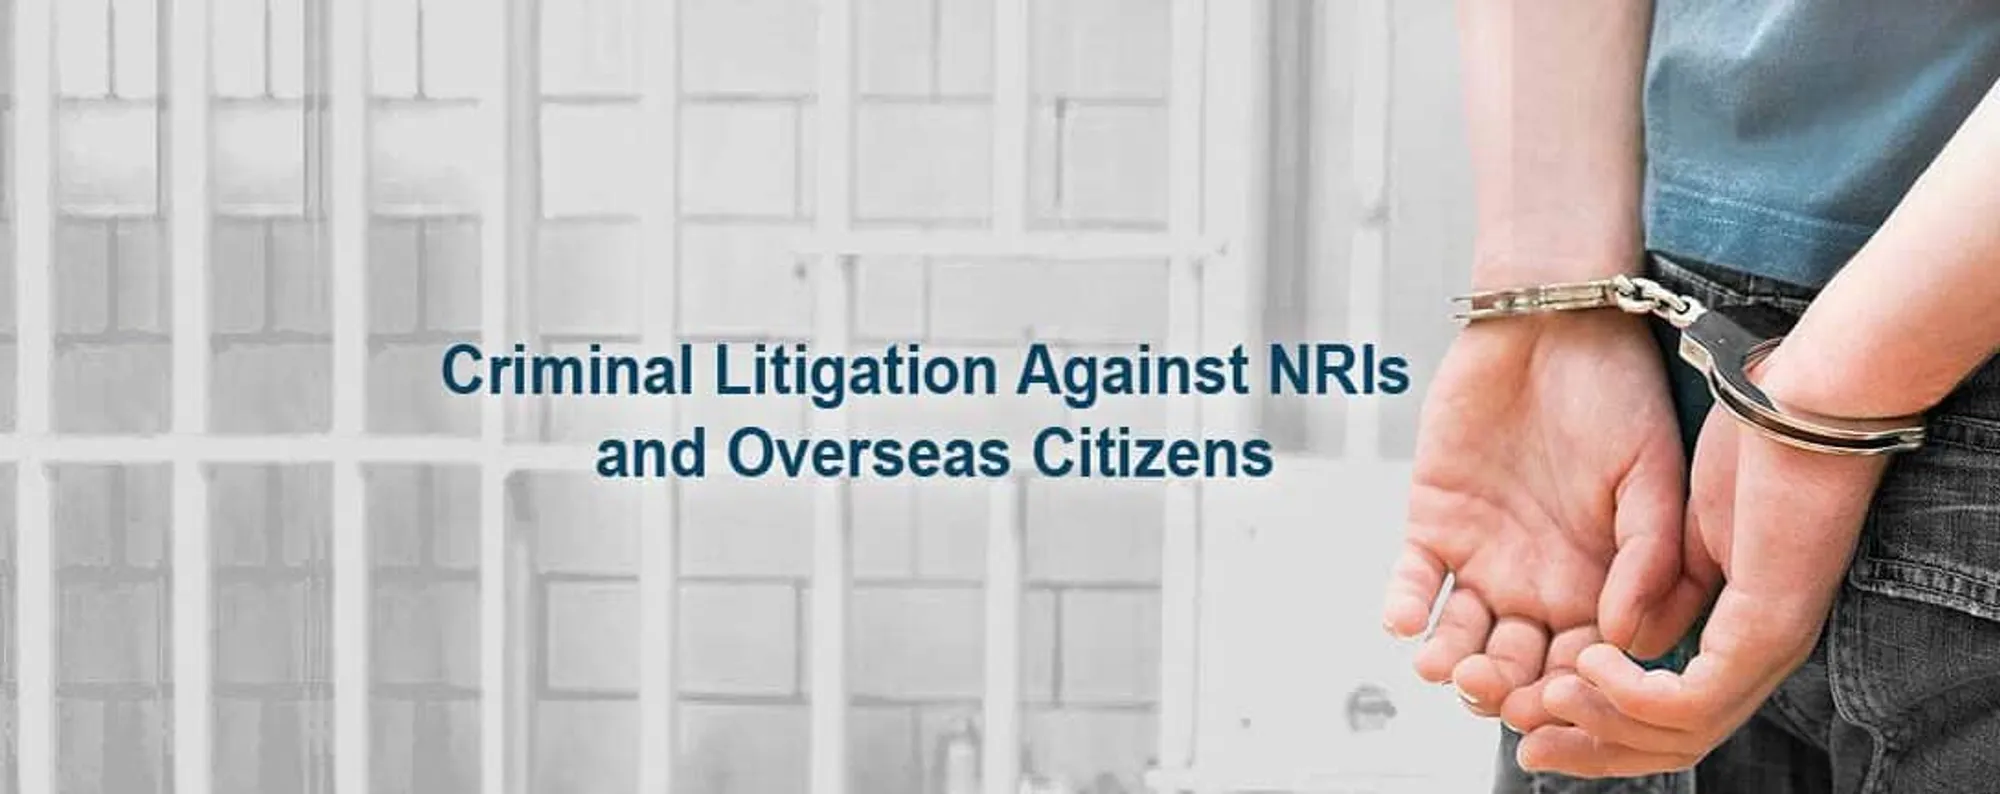 Criminal Litigation Against NRIs and Overseas Citizens